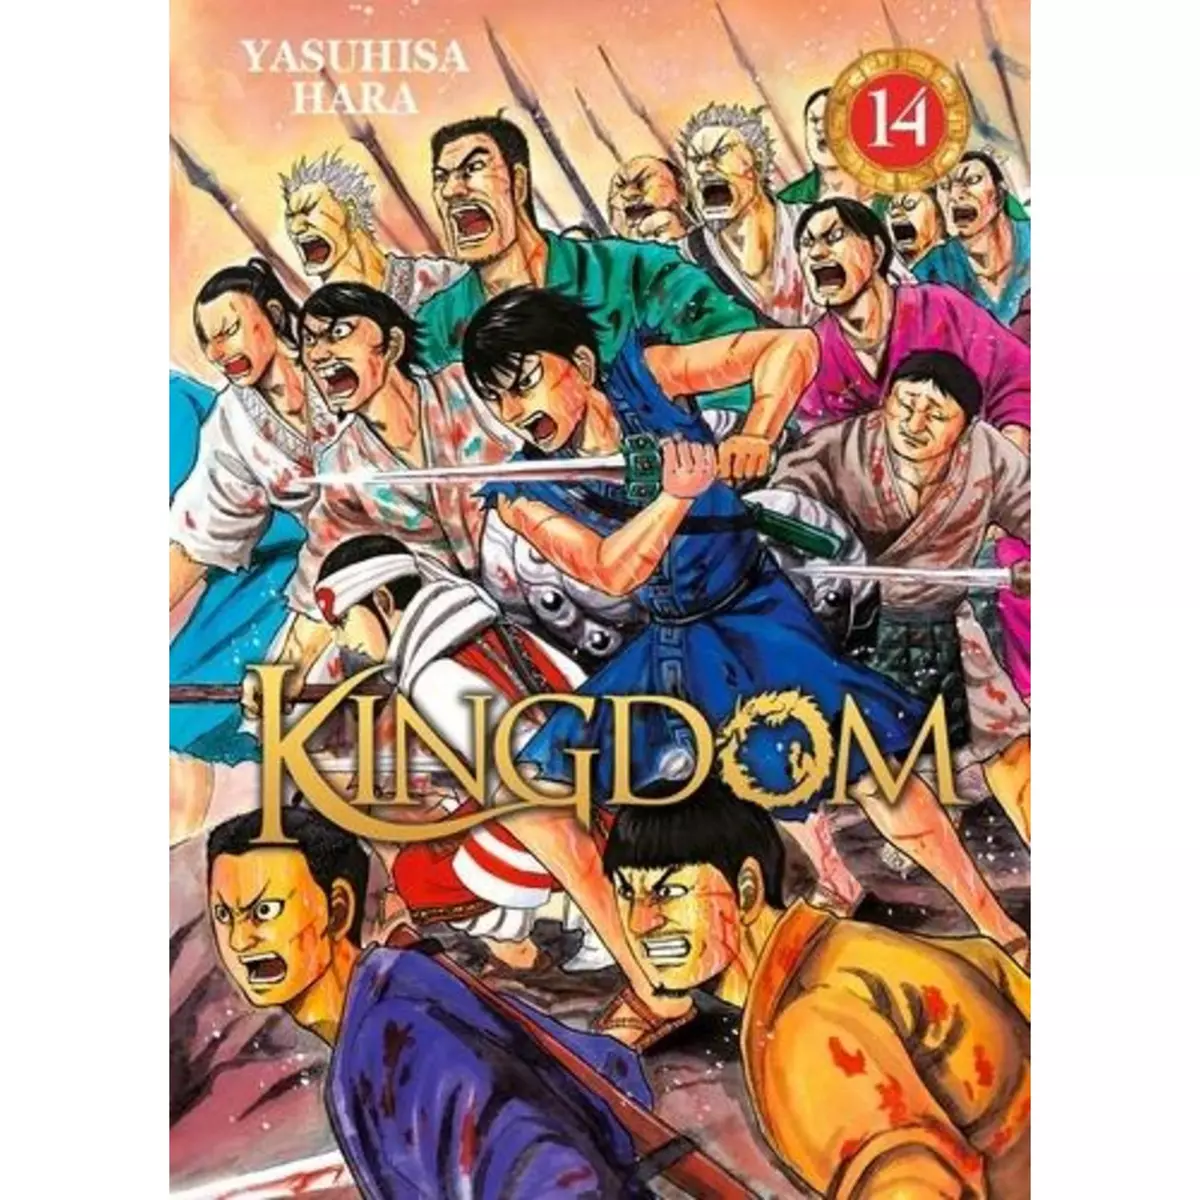  KINGDOM TOME 14, Hara Yasuhisa